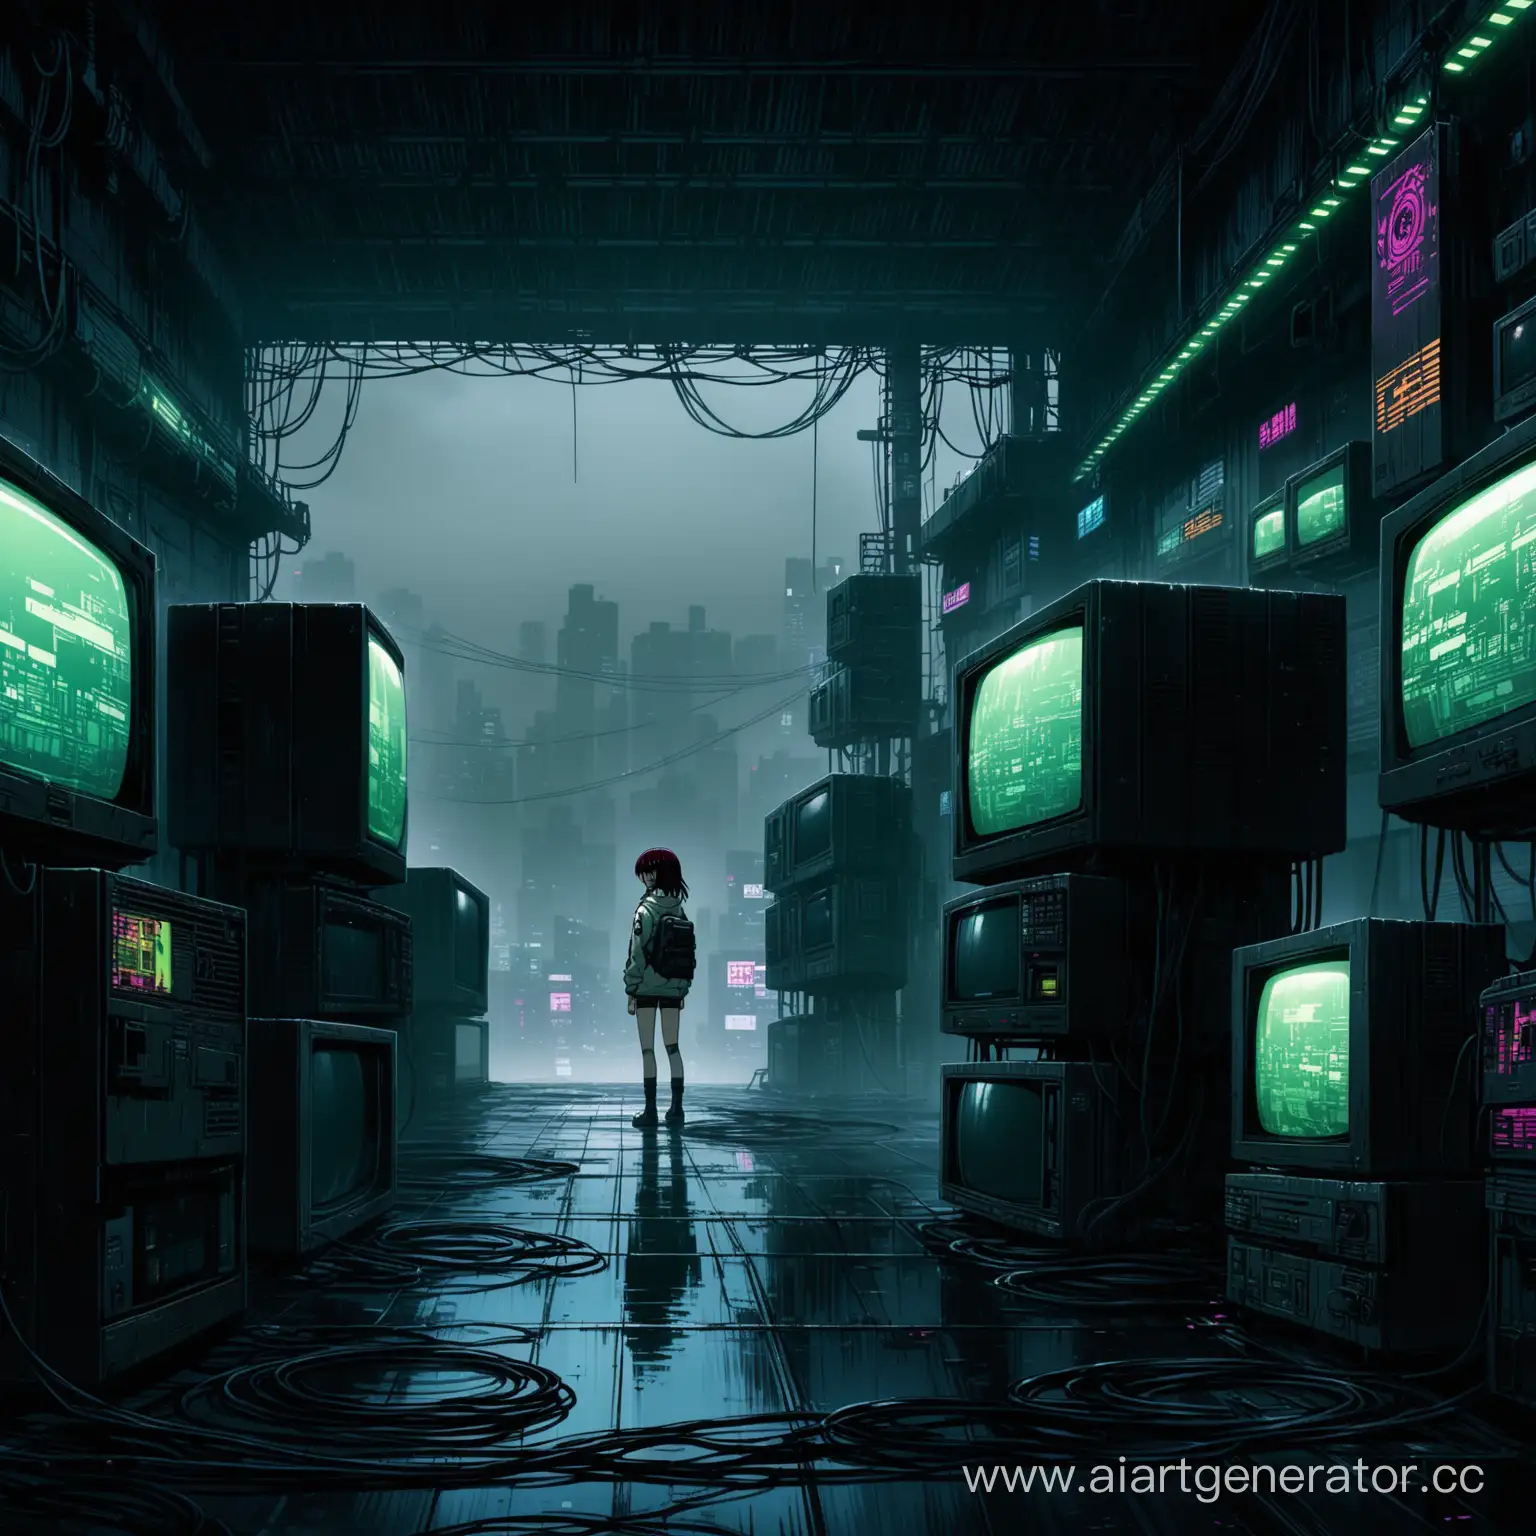 Dark-Cyberpunk-Scene-with-Lain-Iwakura-on-Televisions